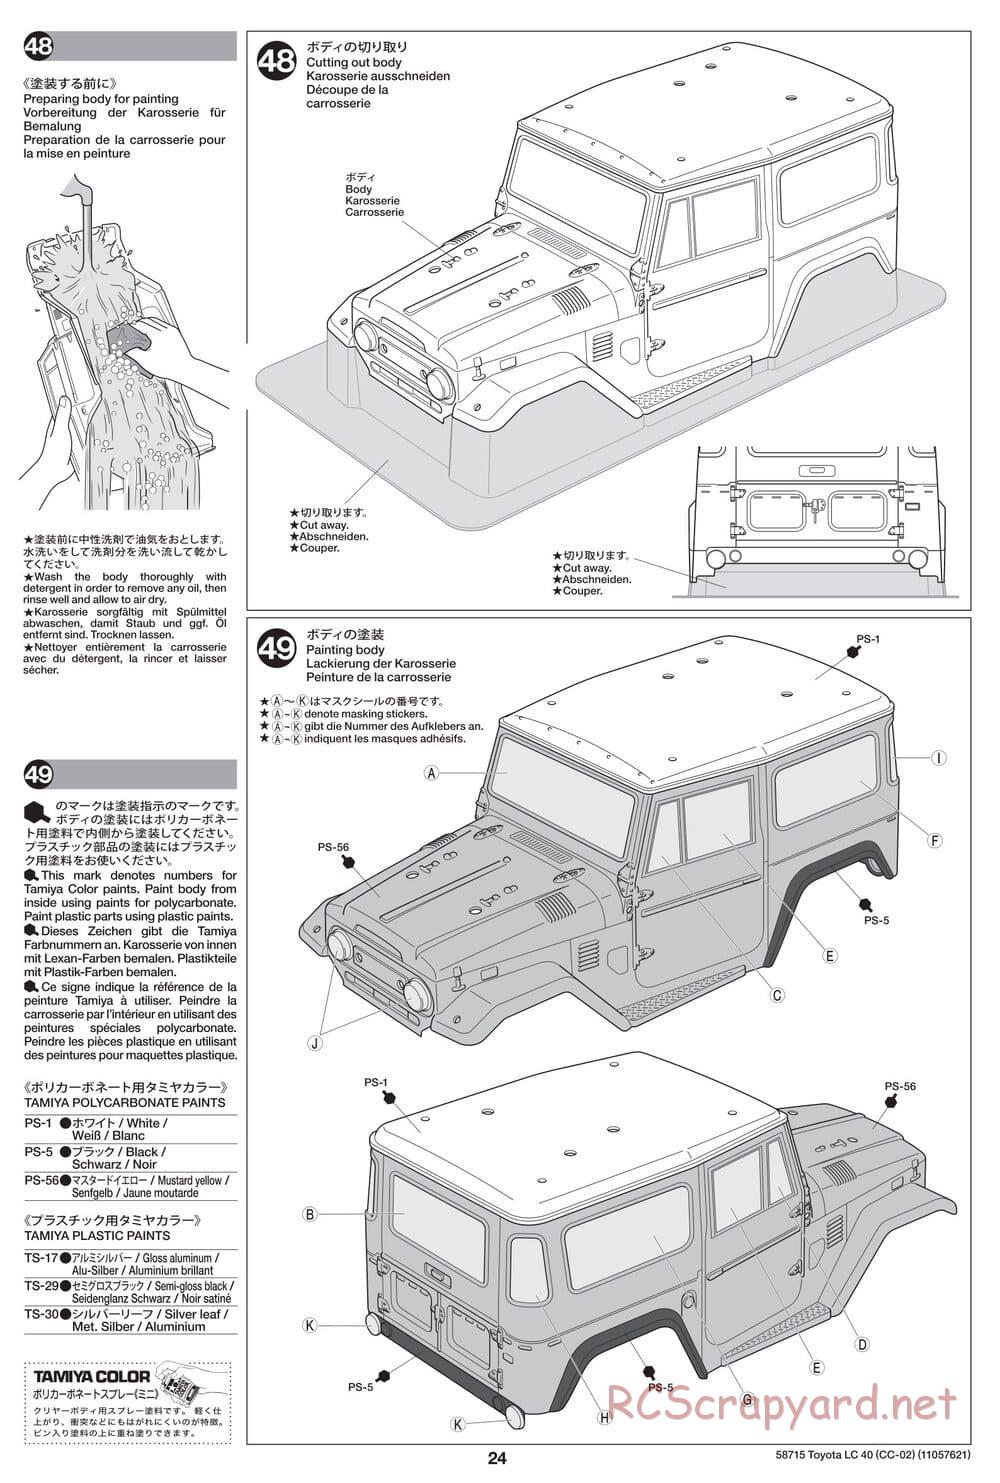 Tamiya - Toyota Land Cruiser 40 - CC-02 Chassis - Manual - Page 24